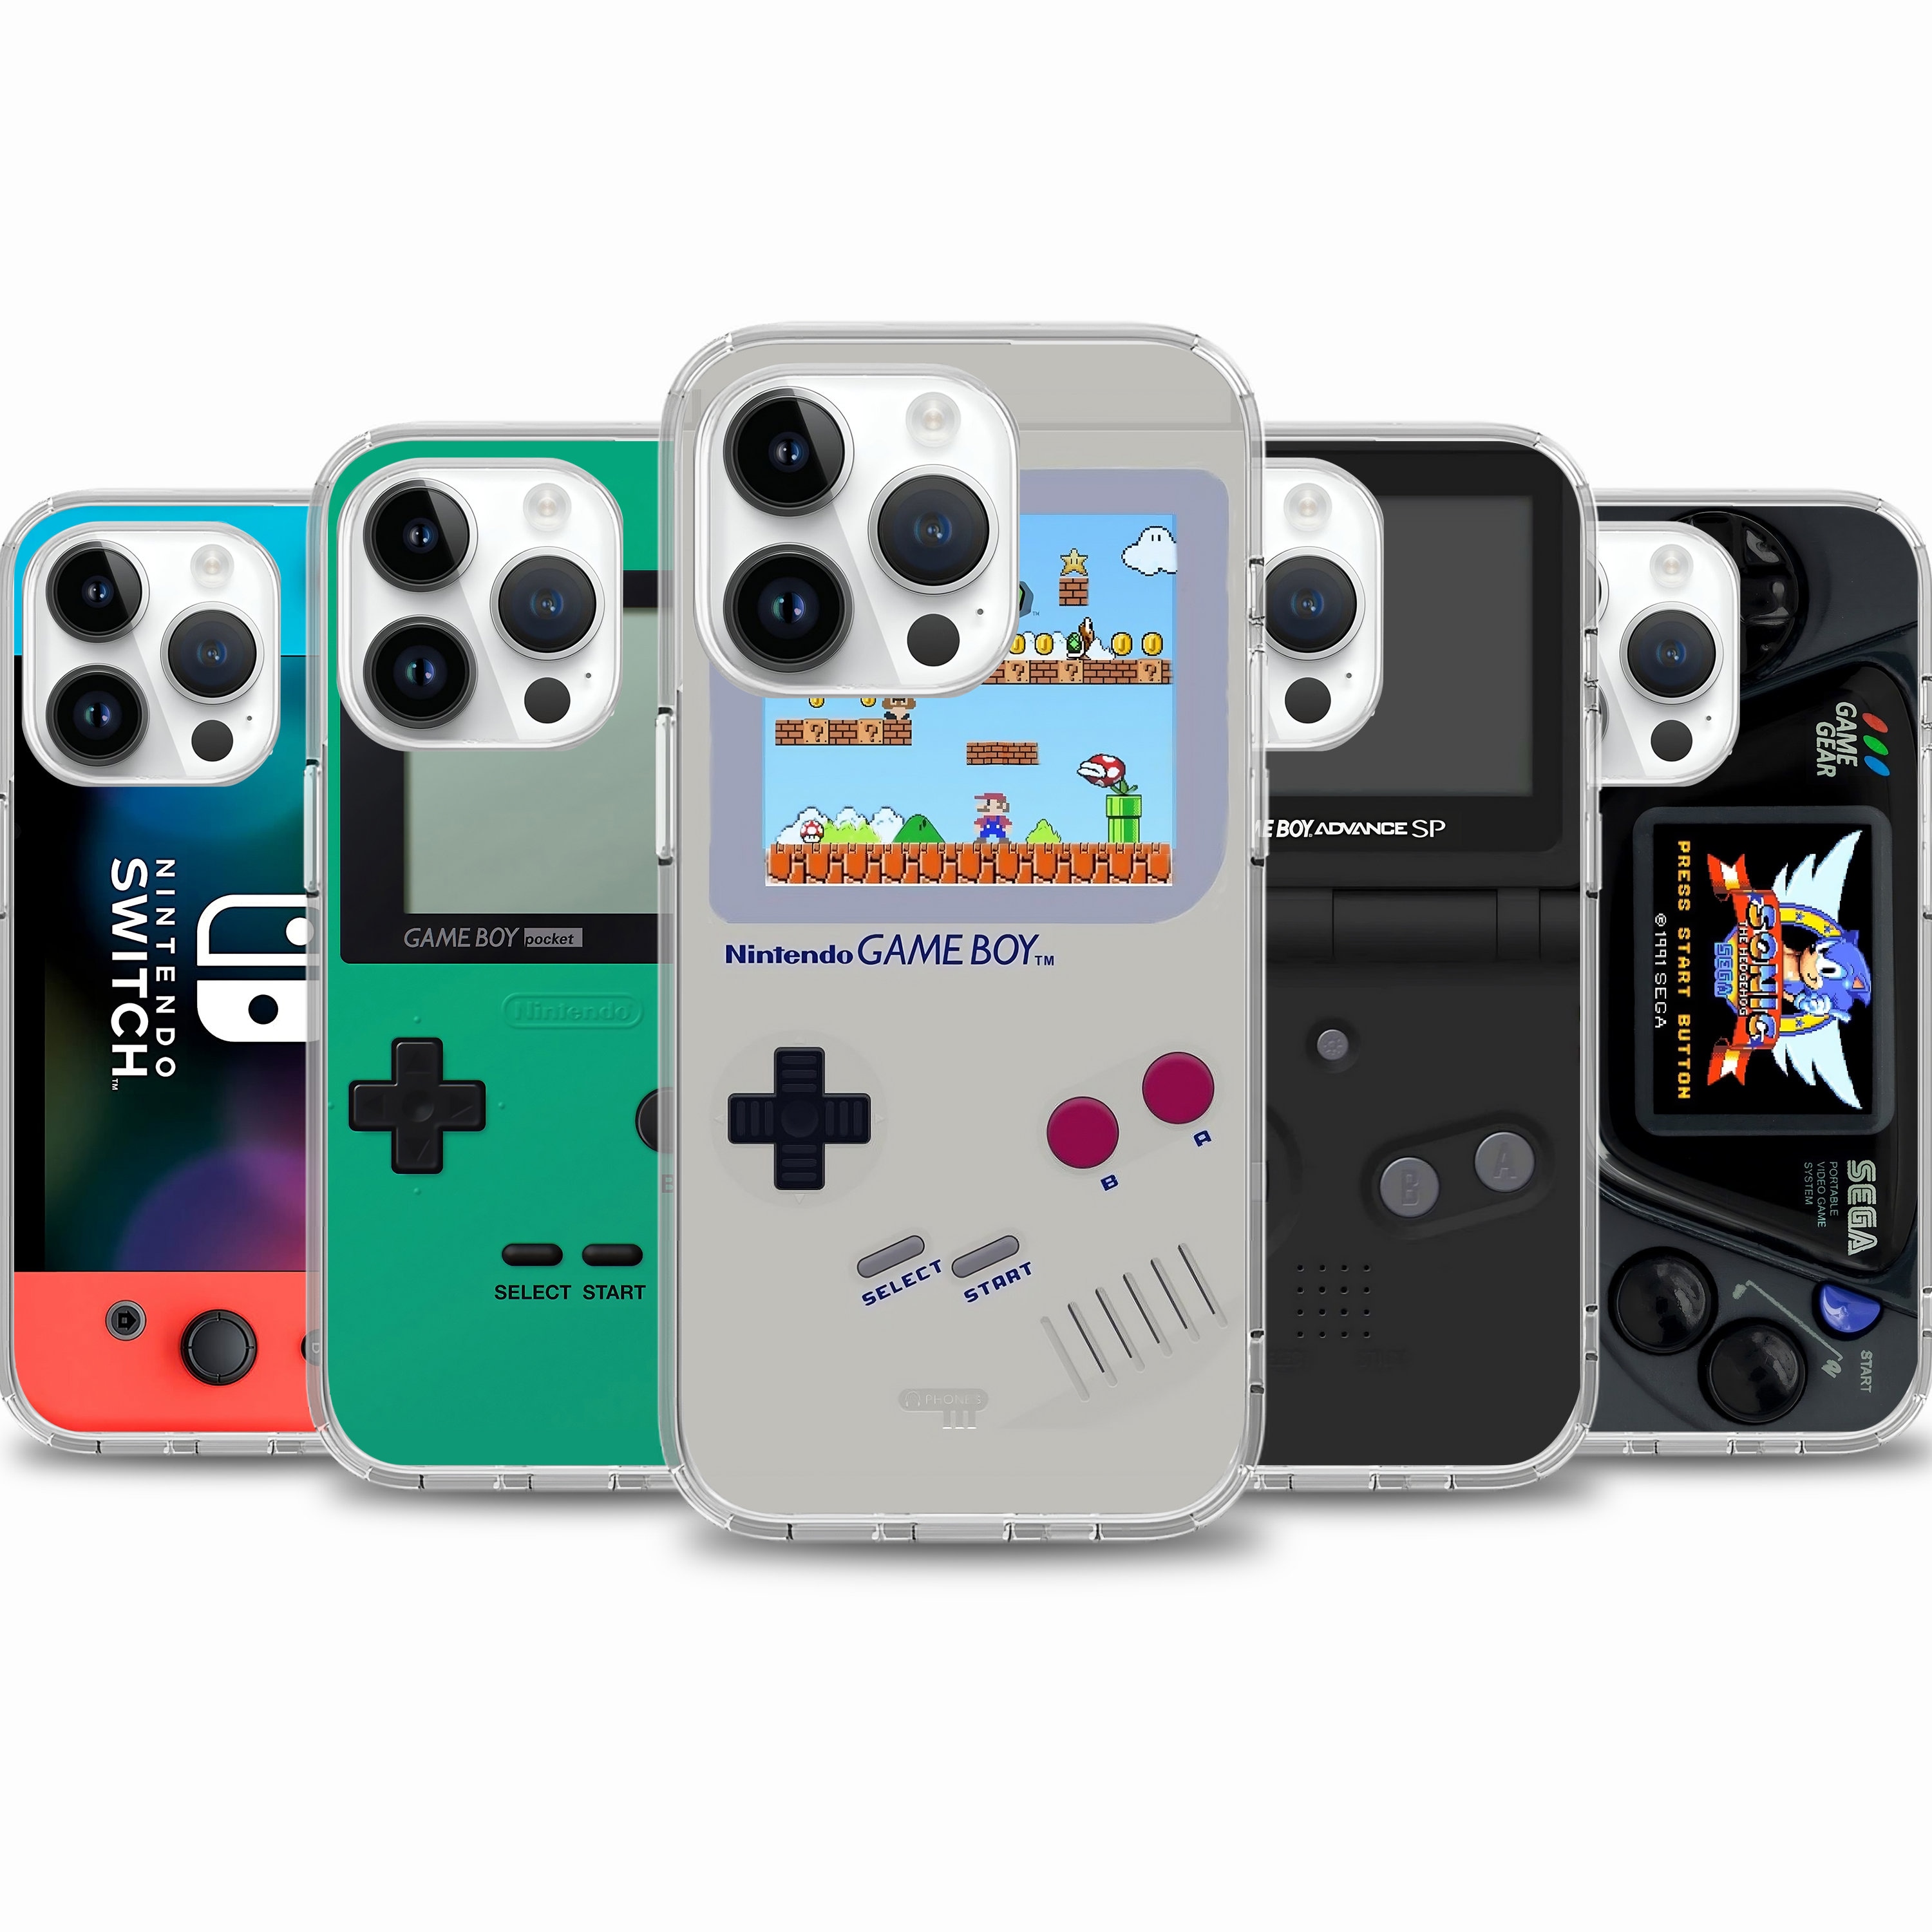 GameBoy Retro Magsafe iPhone Case